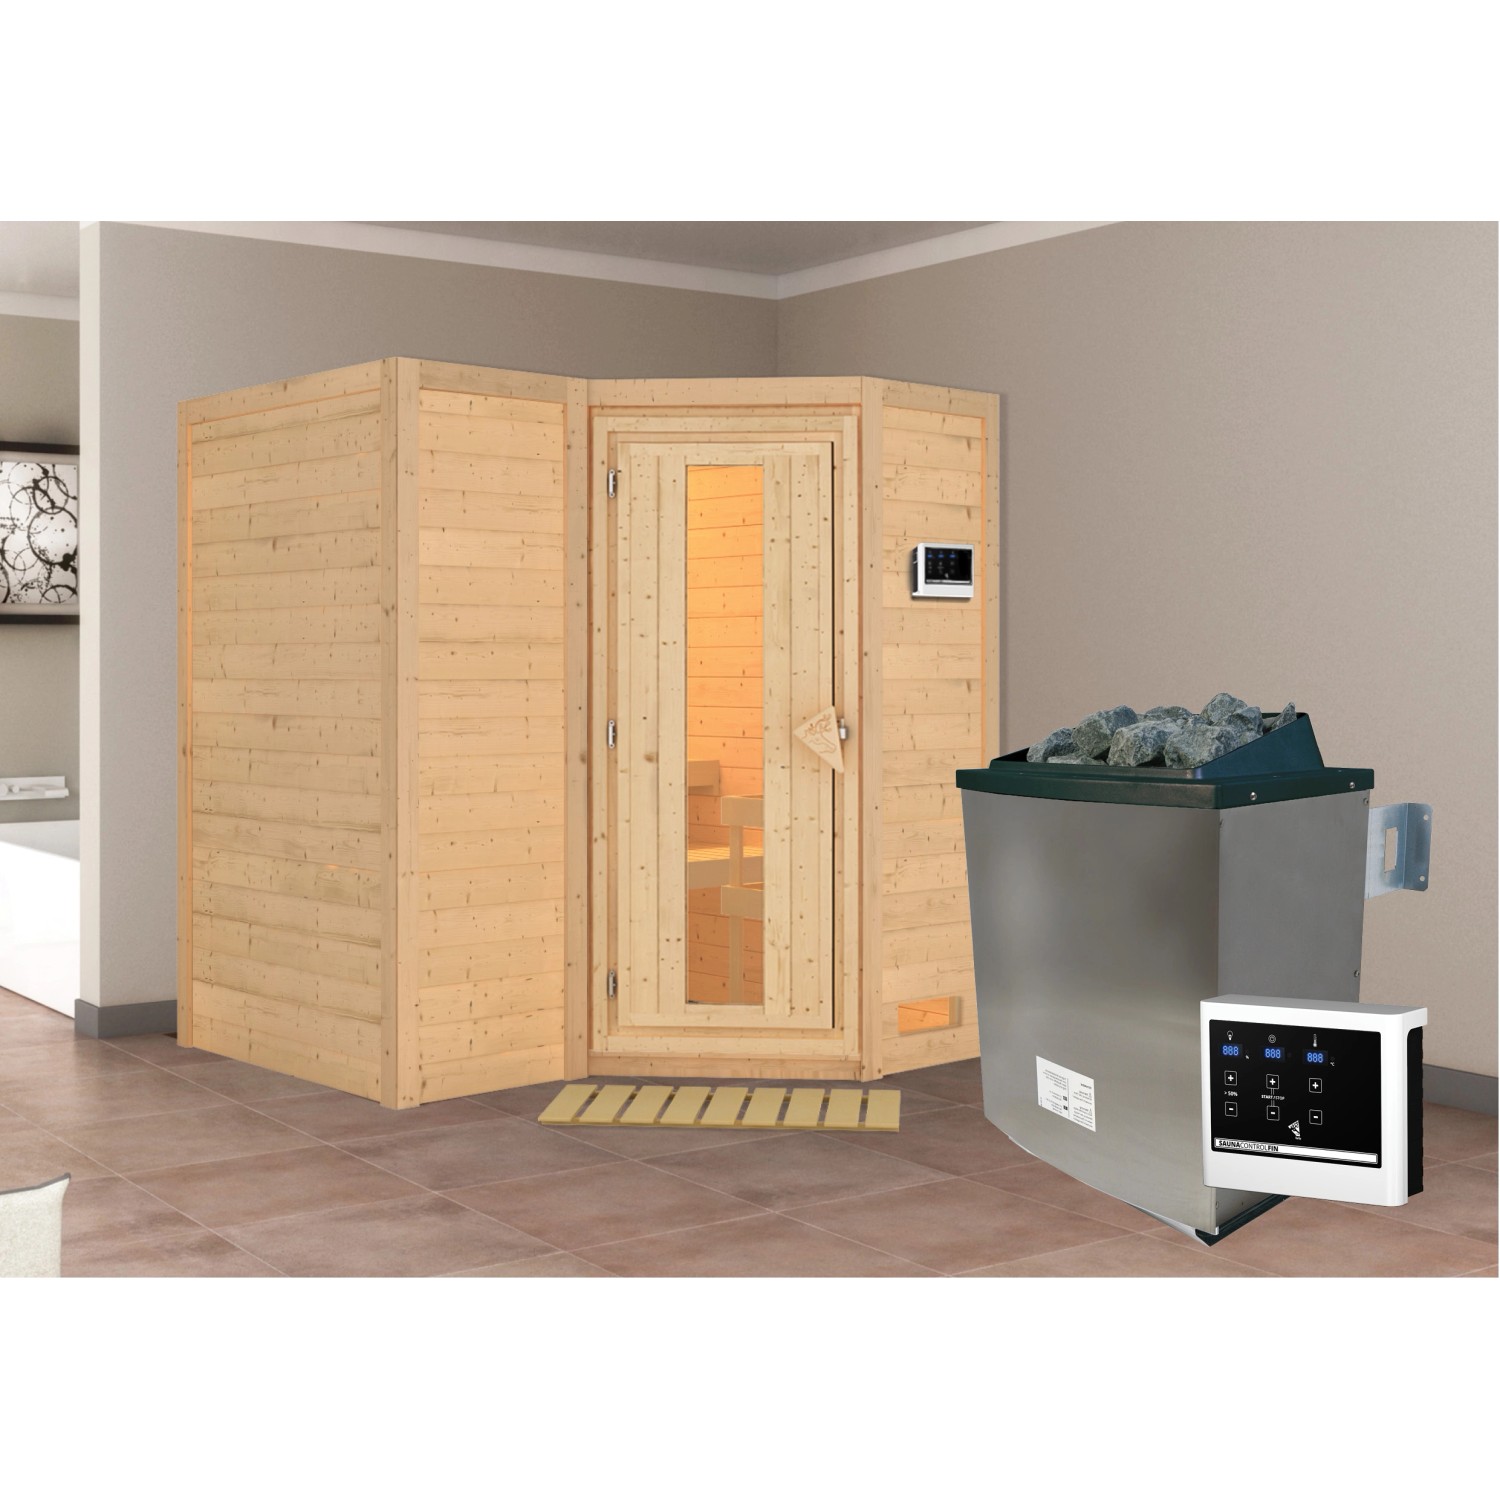 Woodfeeling Sauna-Set Steena 1 inkl. Ofen 9 kW mit ext. Steuerung, Energies günstig online kaufen